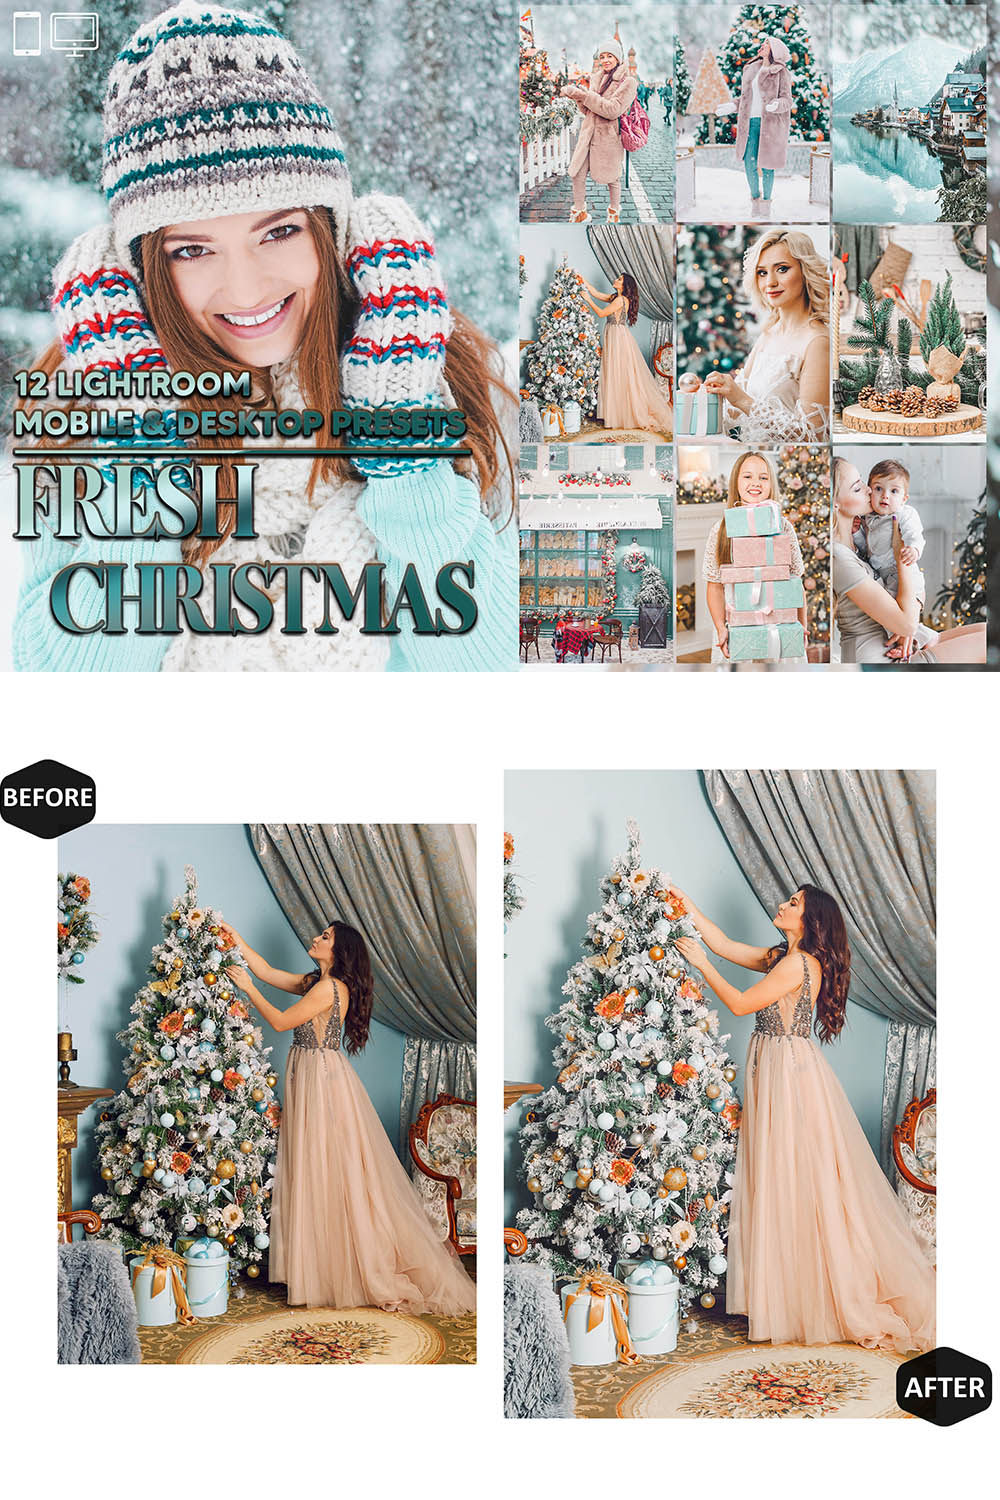 12 Fresh Christmas Lightroom Presets, Holiday Mobile Preset, Green And Blue Desktop LR Filter DNG Scheme Lifestyle Theme For Portrait, Instagram pinterest preview image.